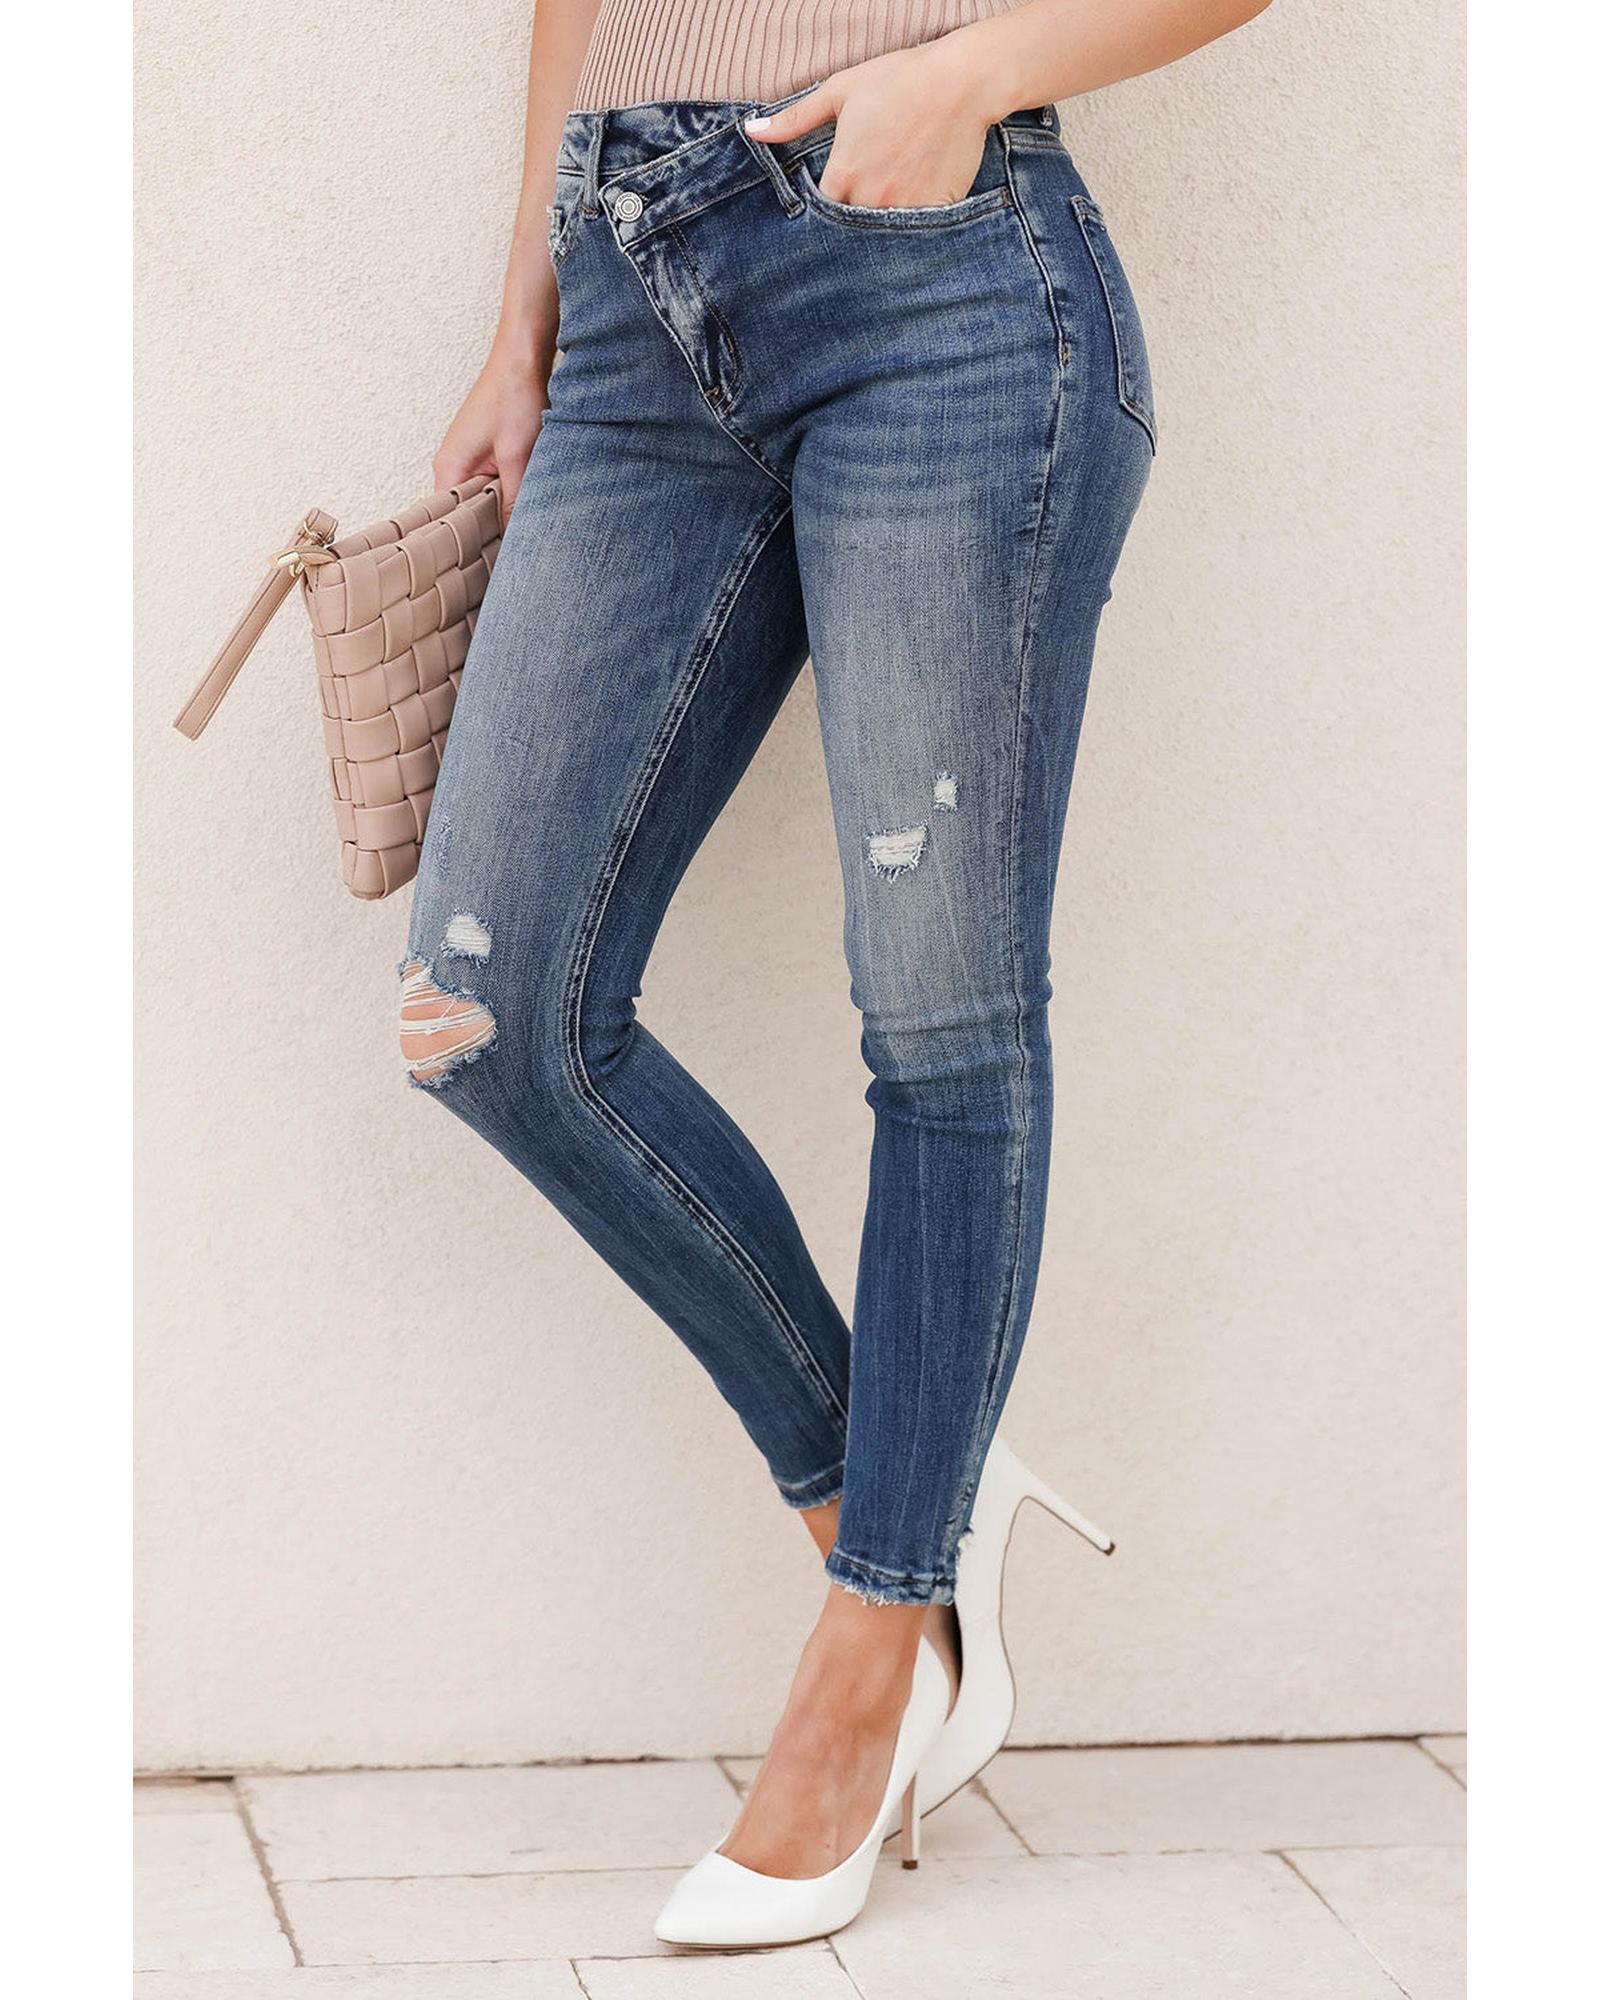 Azura Exchange Asymmetric Distressed Skinny Jeans - 10 US